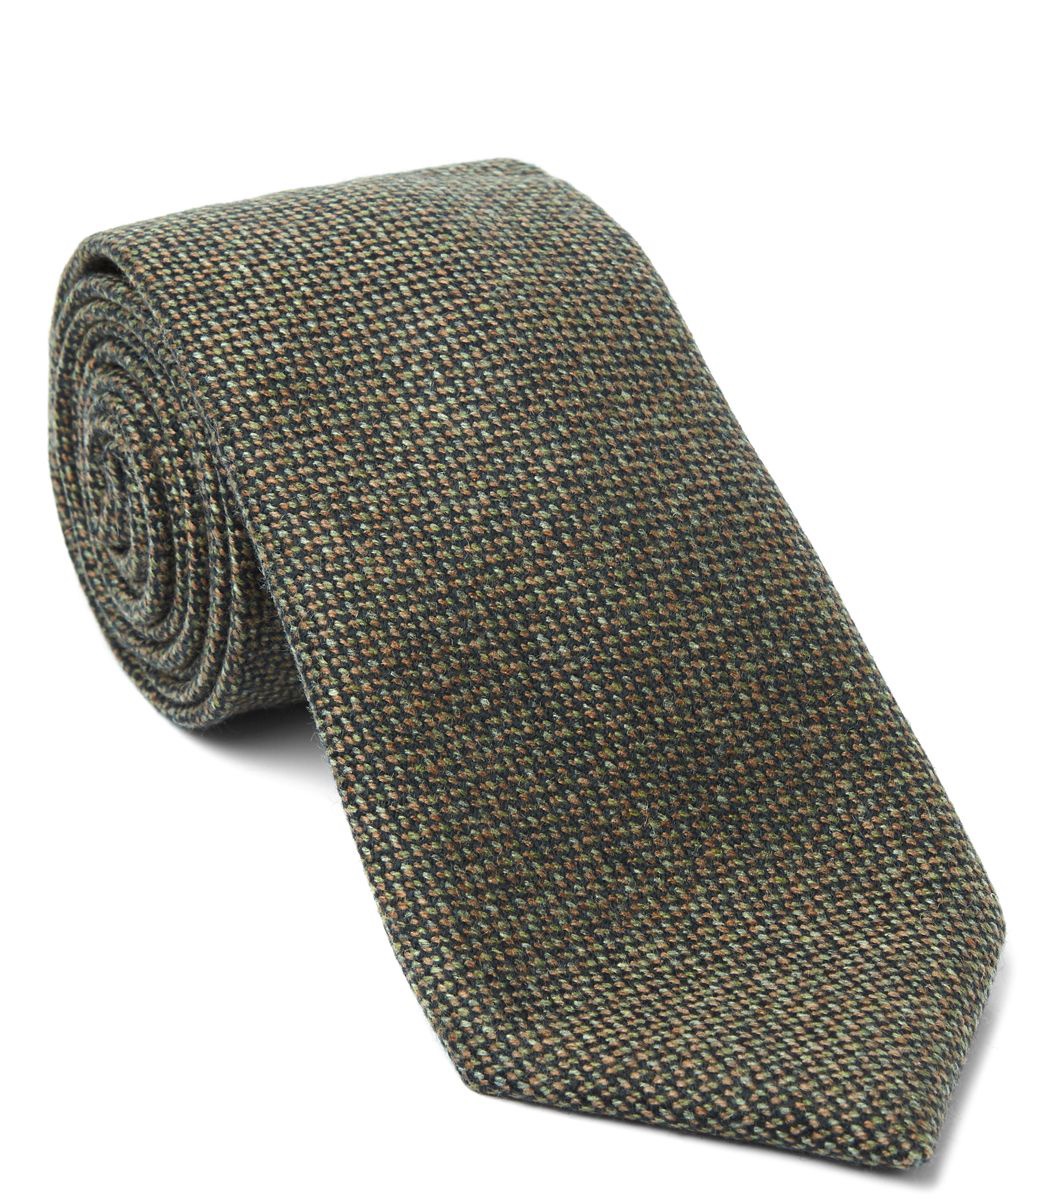 Purdey Cashmere Tweed Tie - Moss • Calvert Sporting